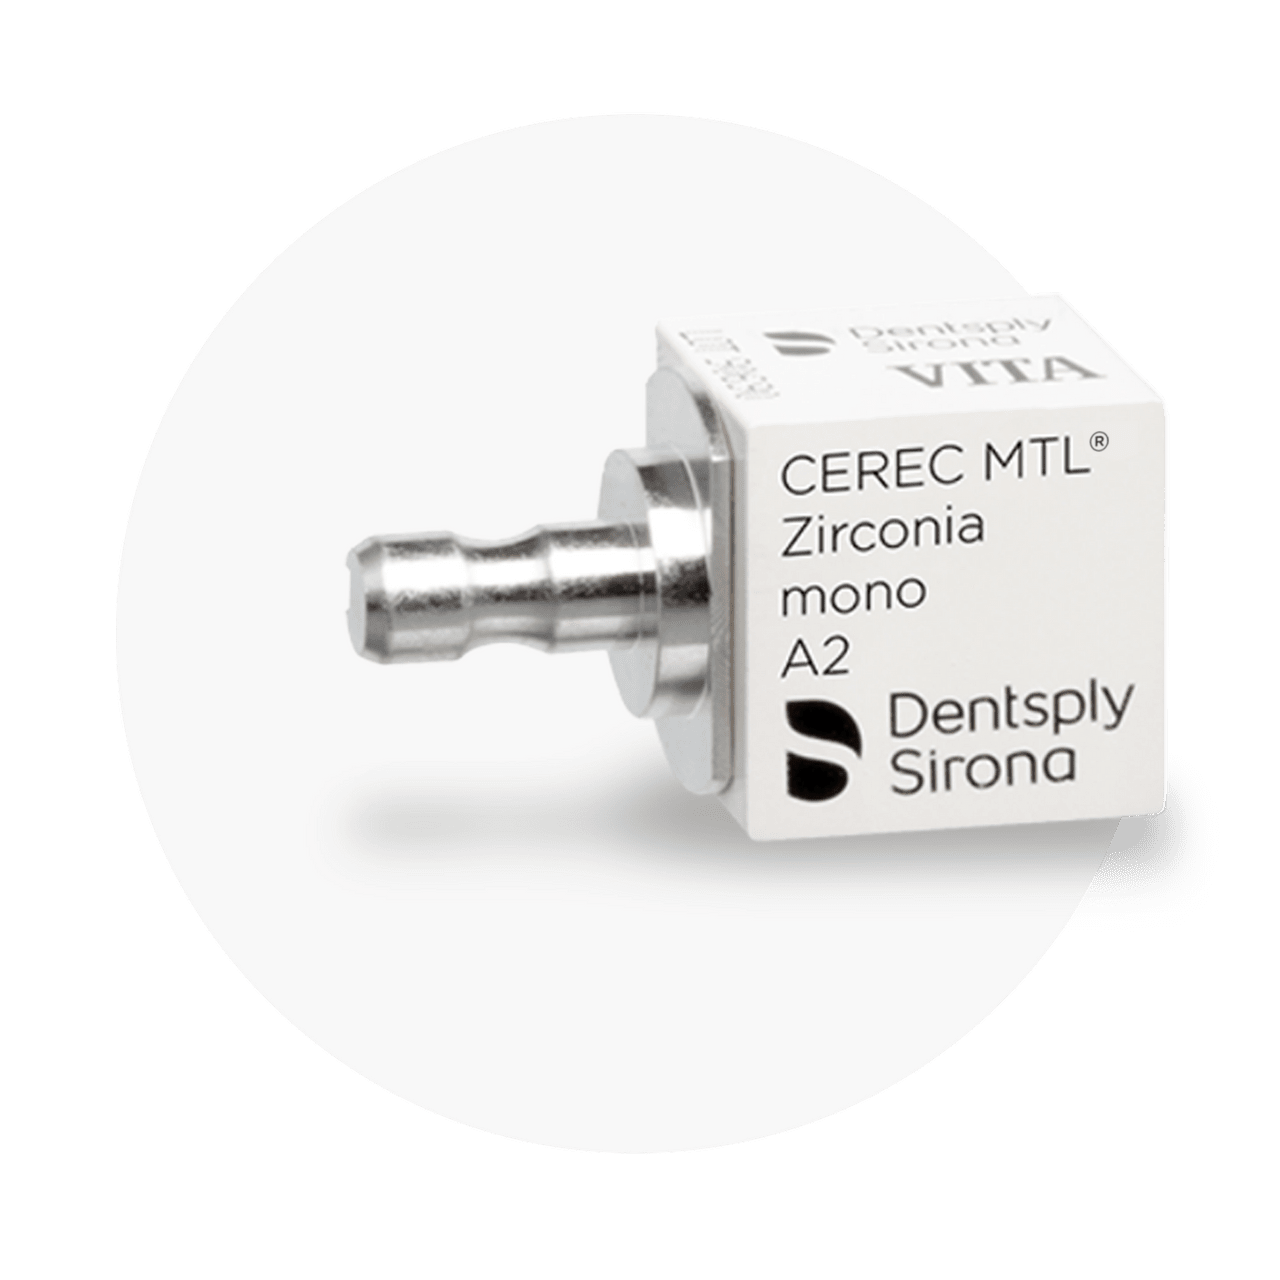 CEREC MTL Zirconia blocks